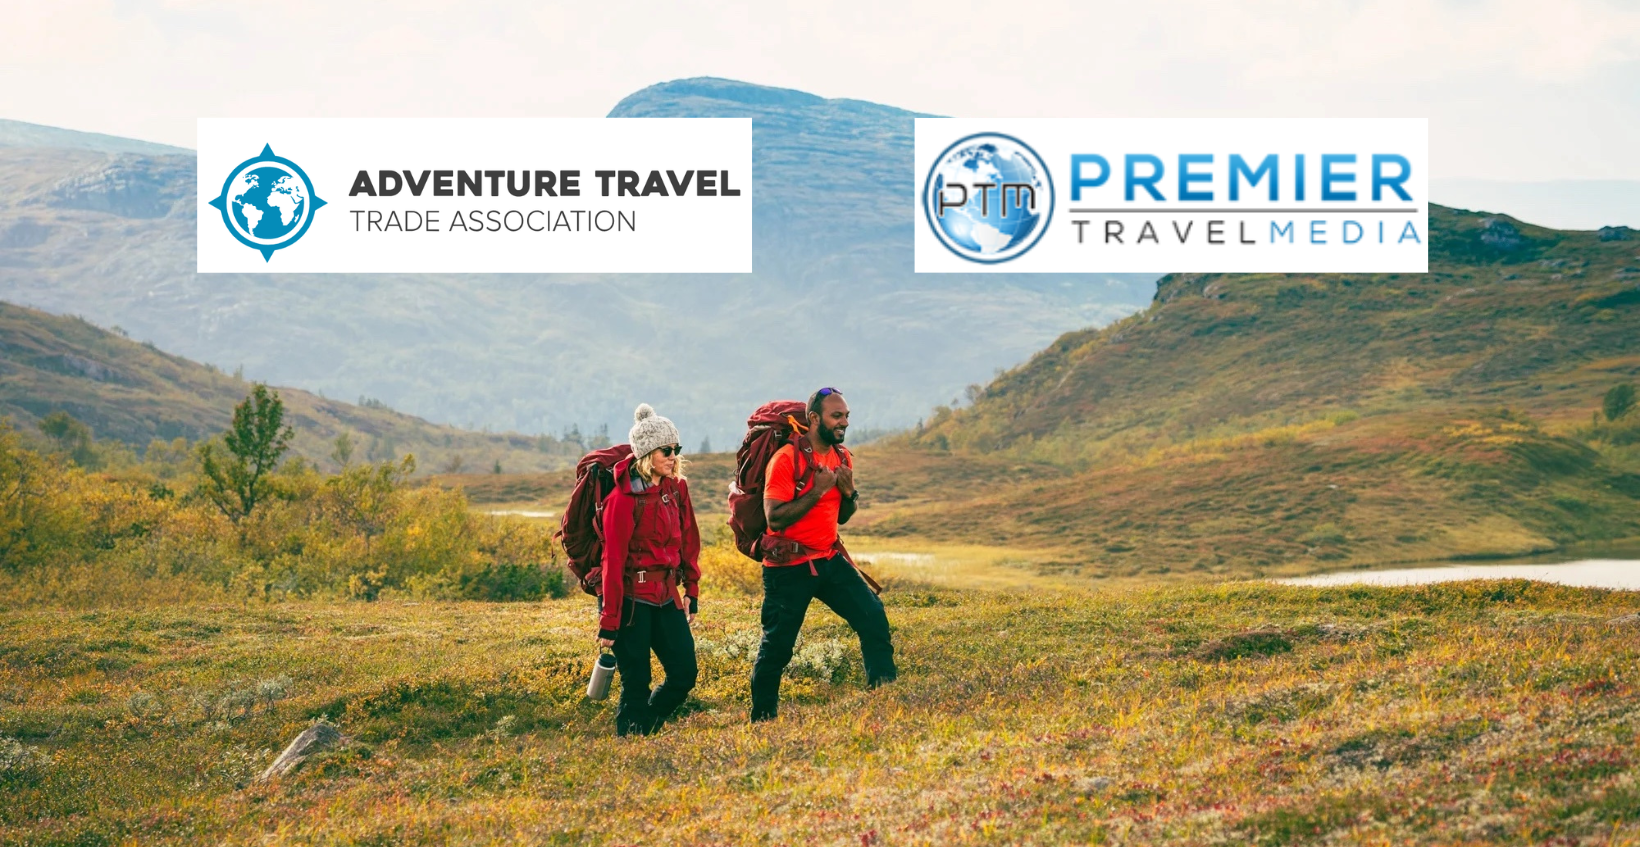 Adventure Travel Trade Association and Premier Travel Media Partner to Create Commemorative Publication